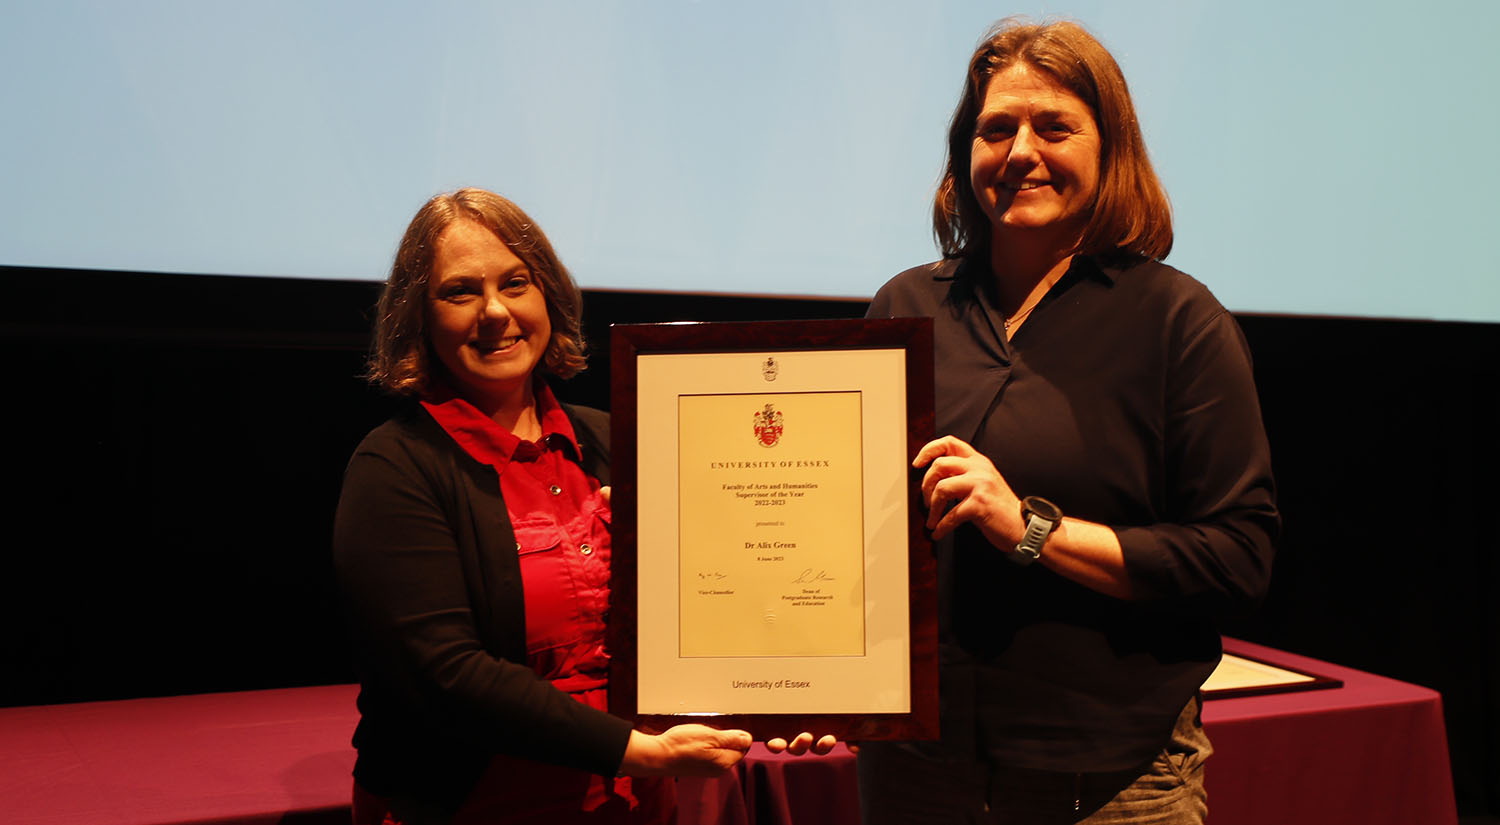 Dr Alix Green receives her award